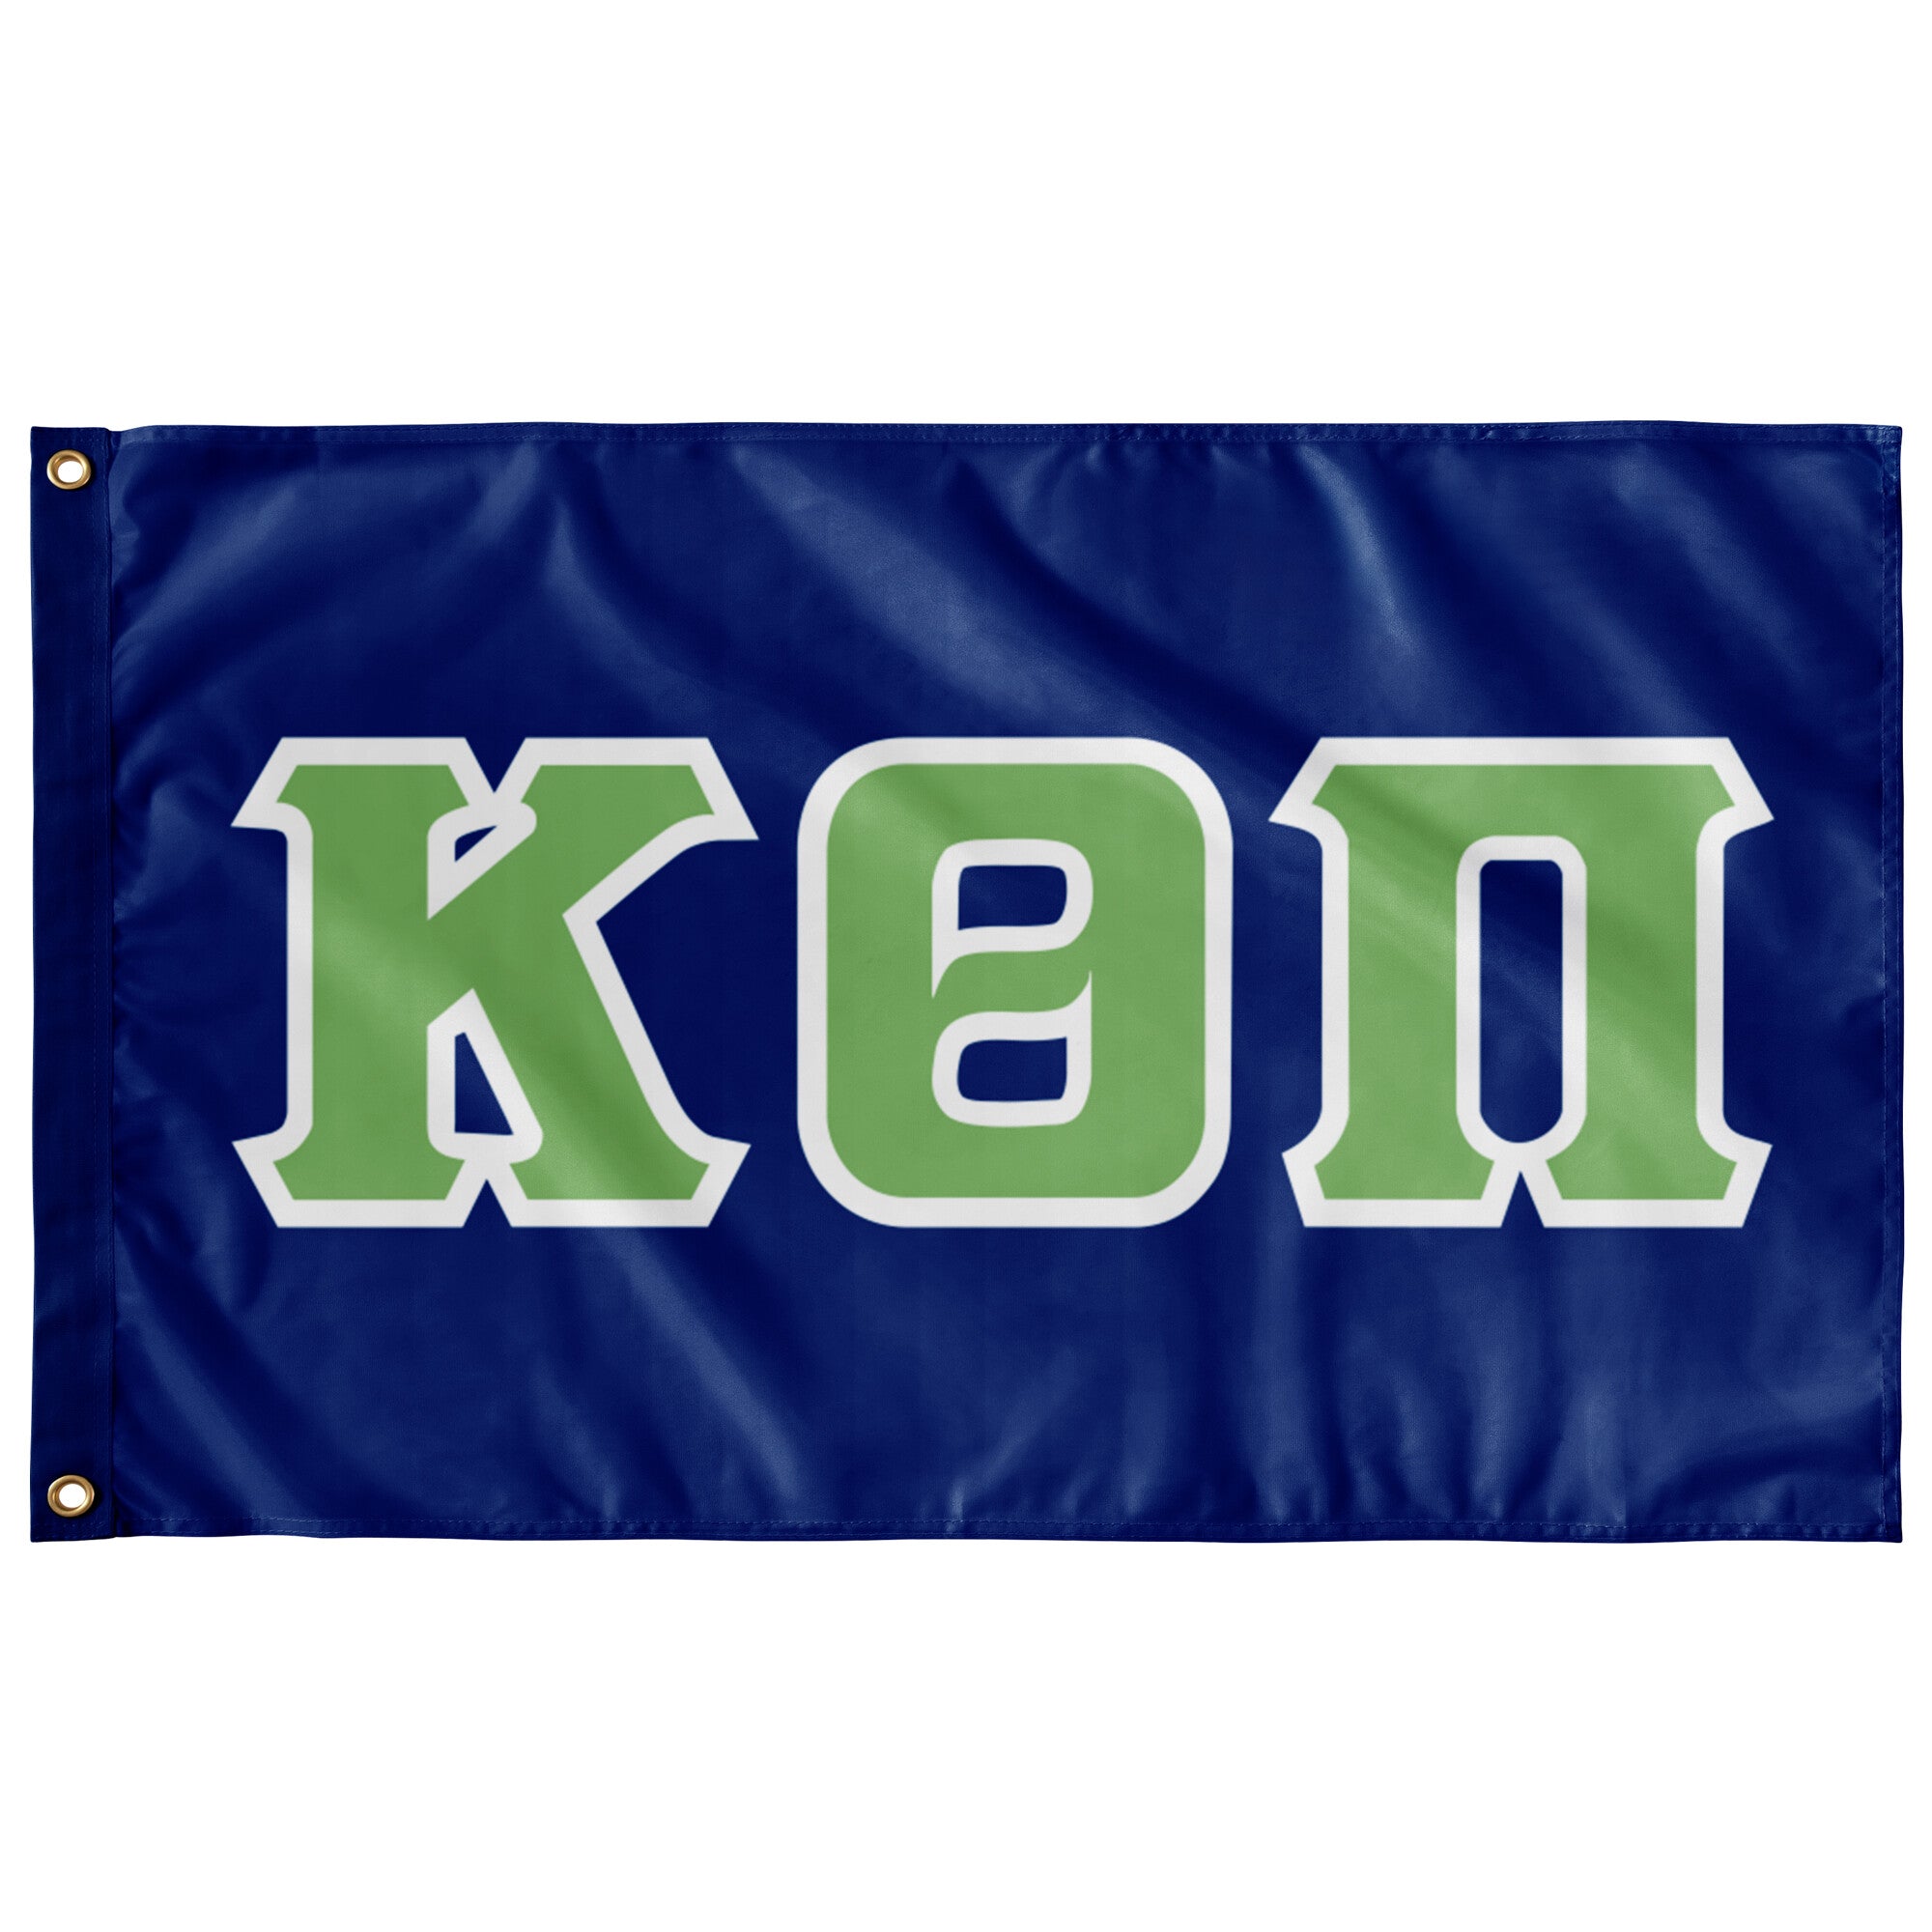 Kappa Theta Pi Greek Fraternity Banners - DesignerGreek DesignerGreek2